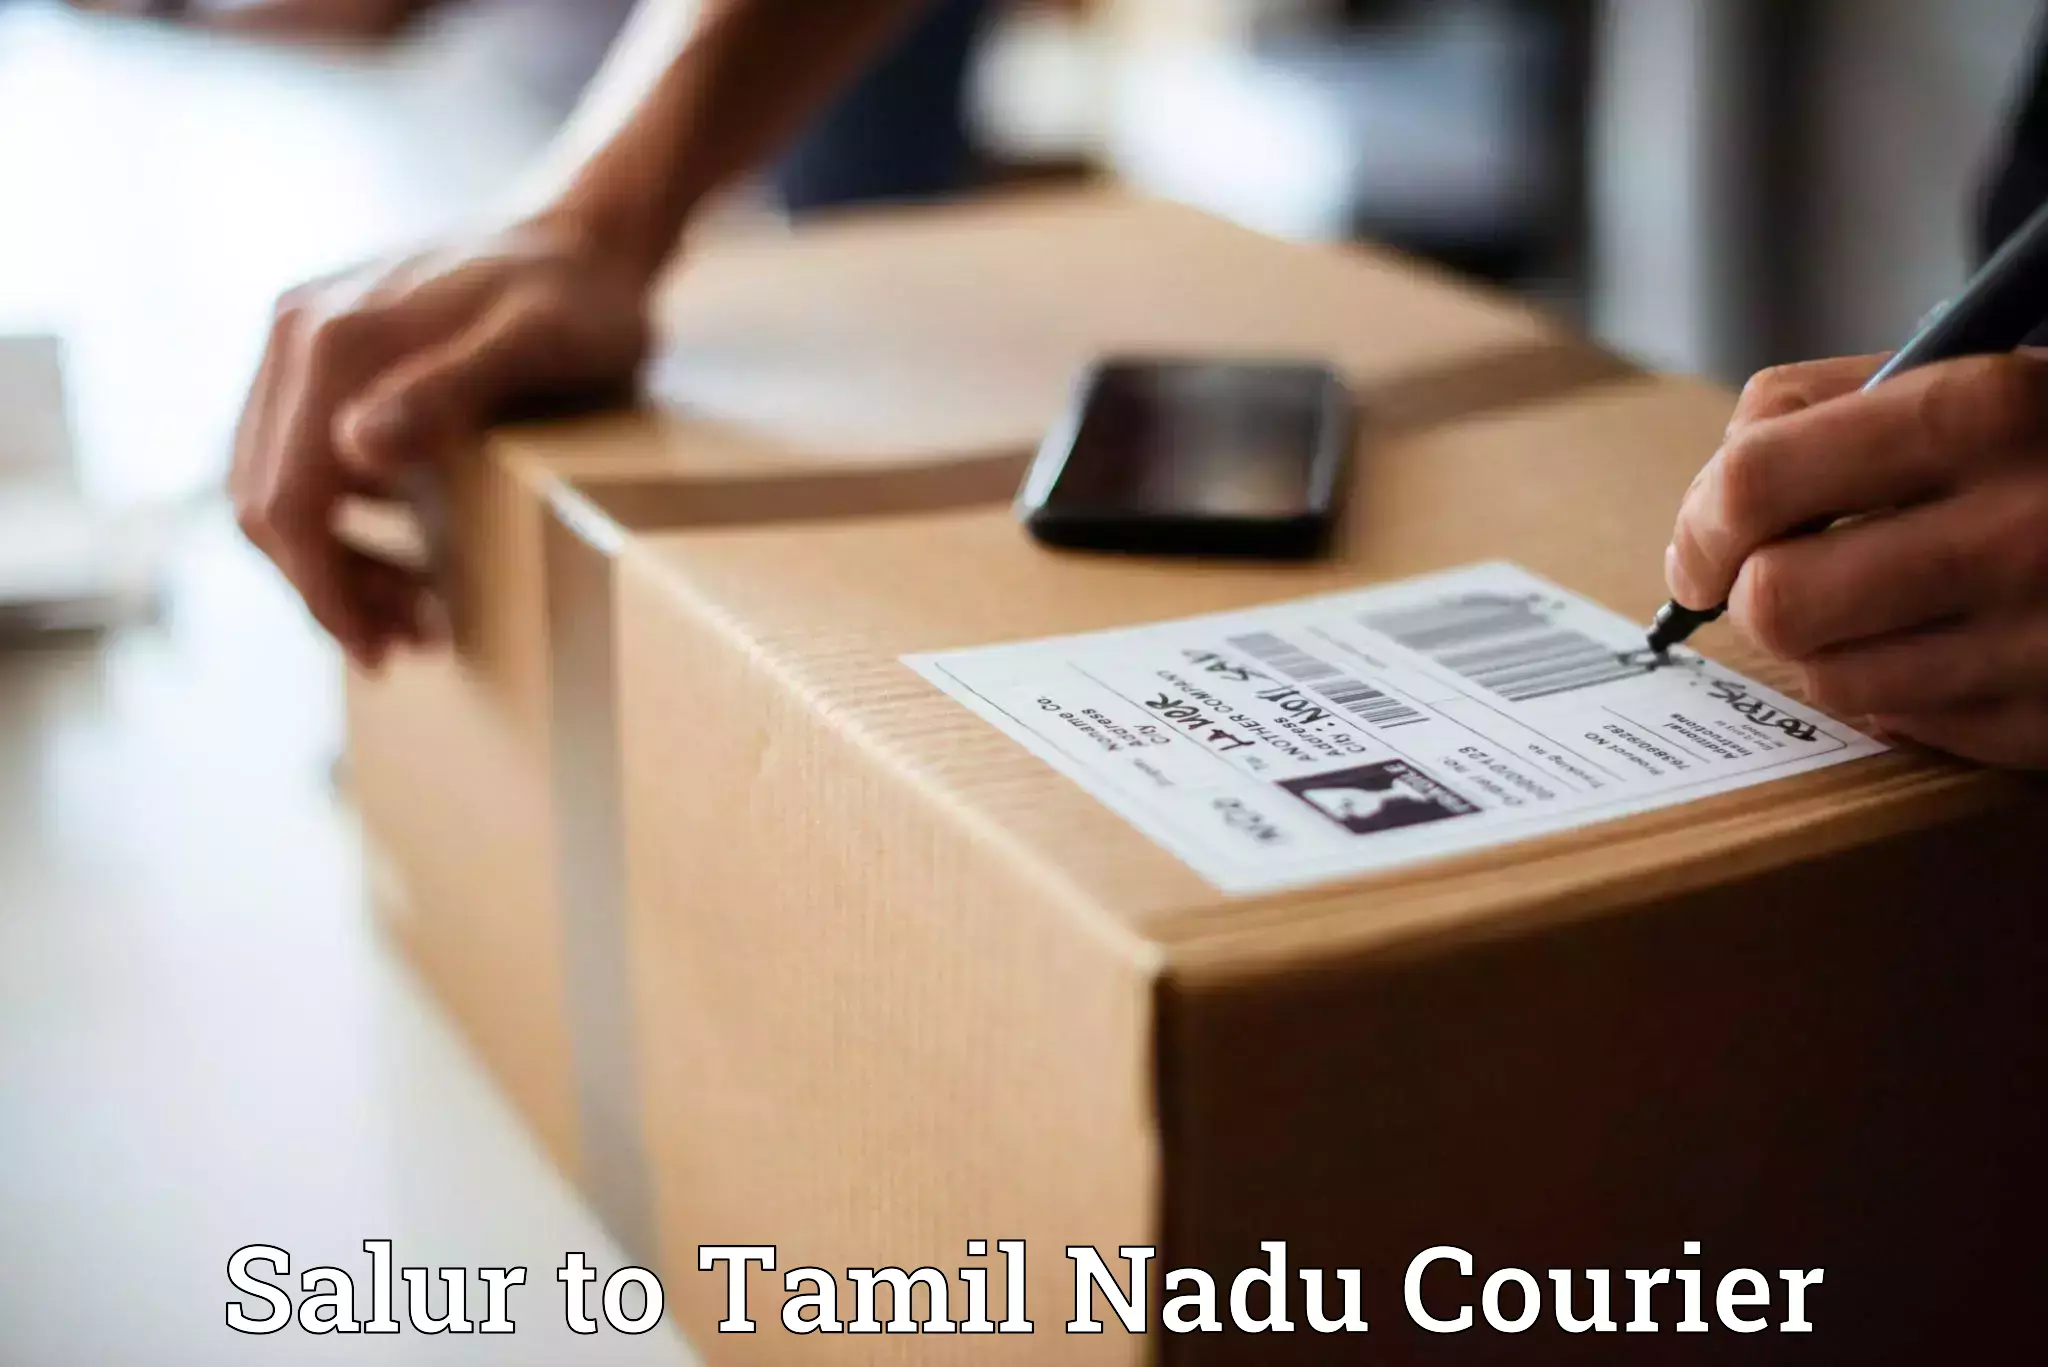 Digital courier platforms Salur to Chennai